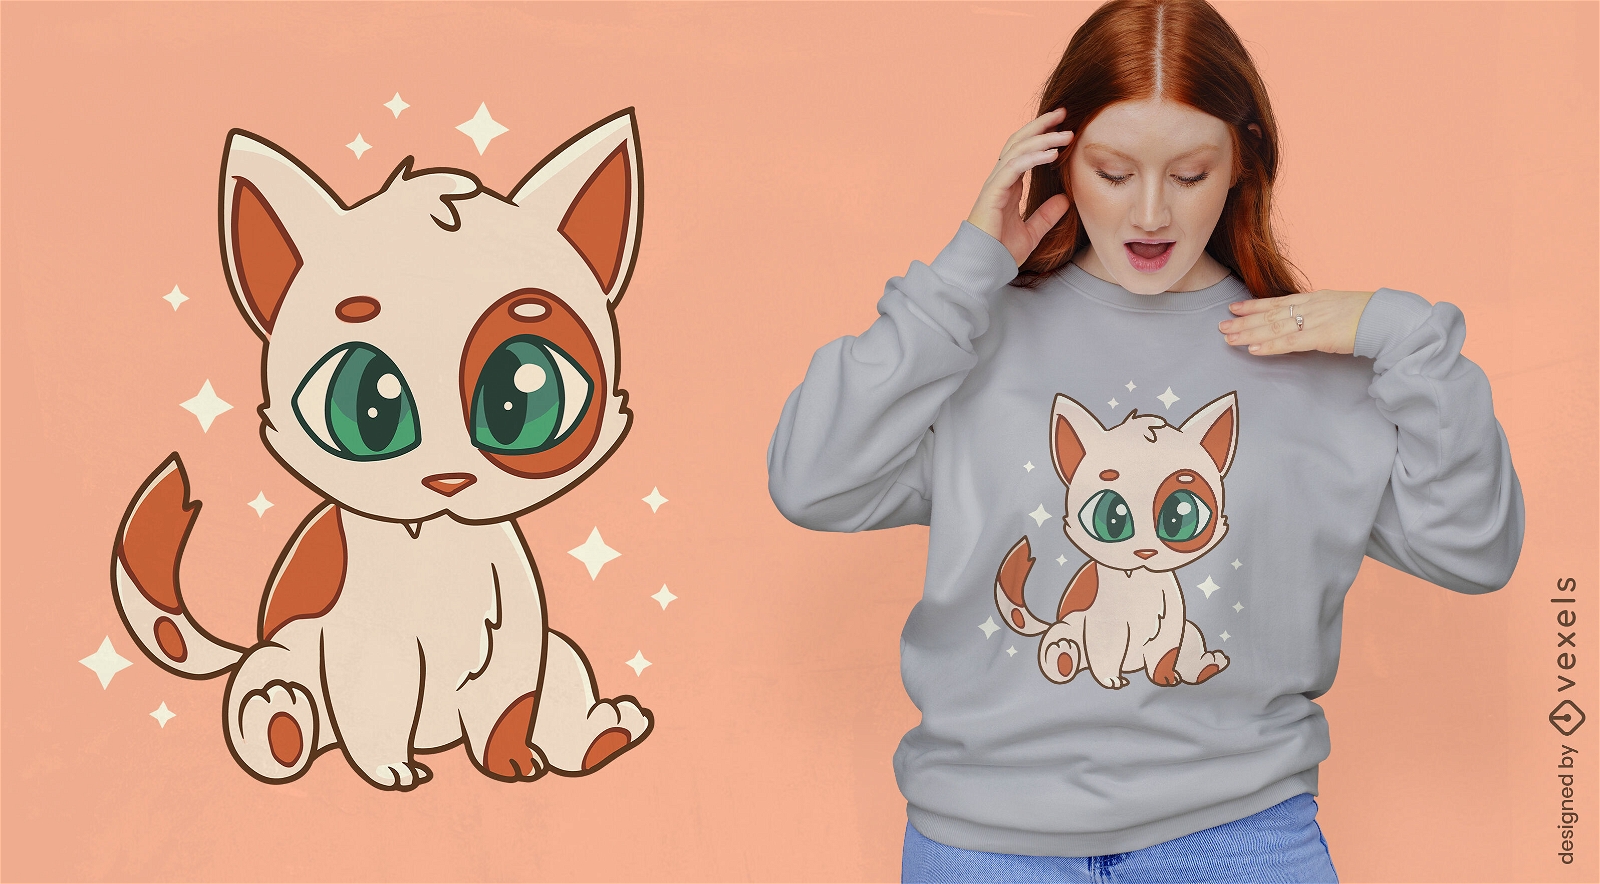 Cute baby cat t-shirt design